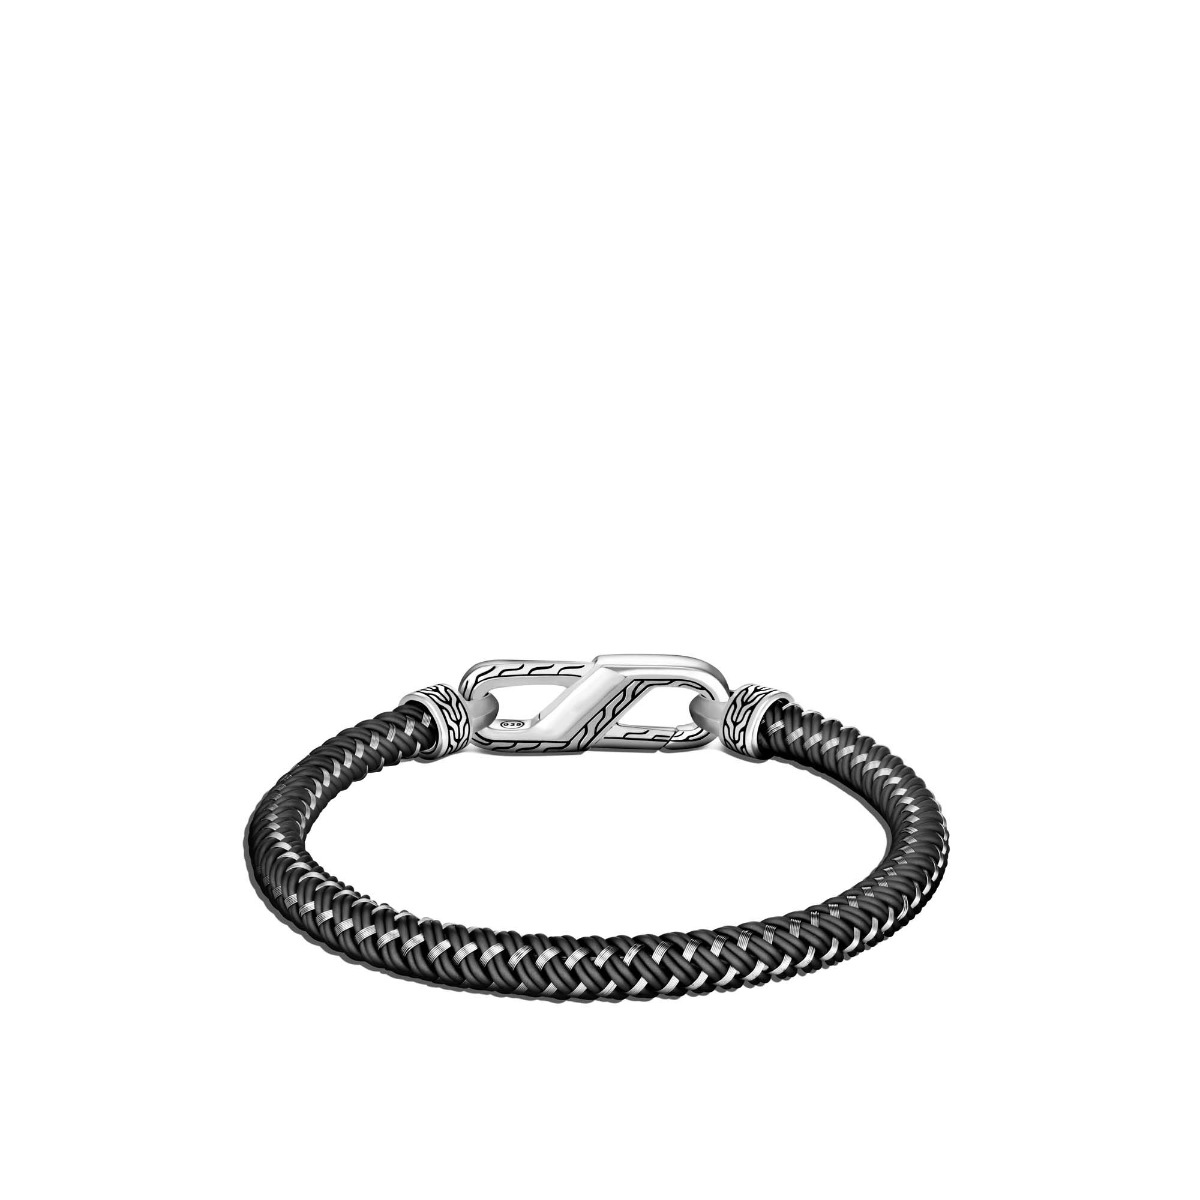 John Hardy "Classic Chain" Black Men's Bracelet with Steel Cord